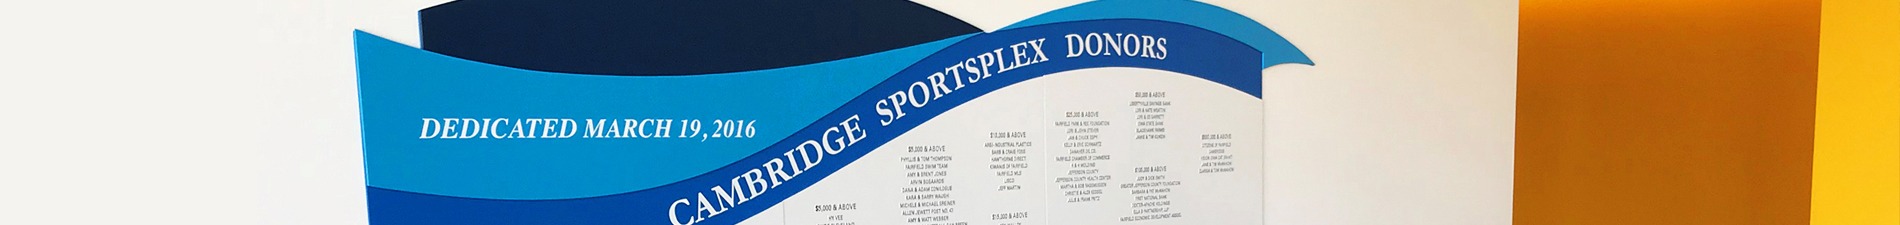 Header image of blue and white Cambridge Sportsplex donor wall